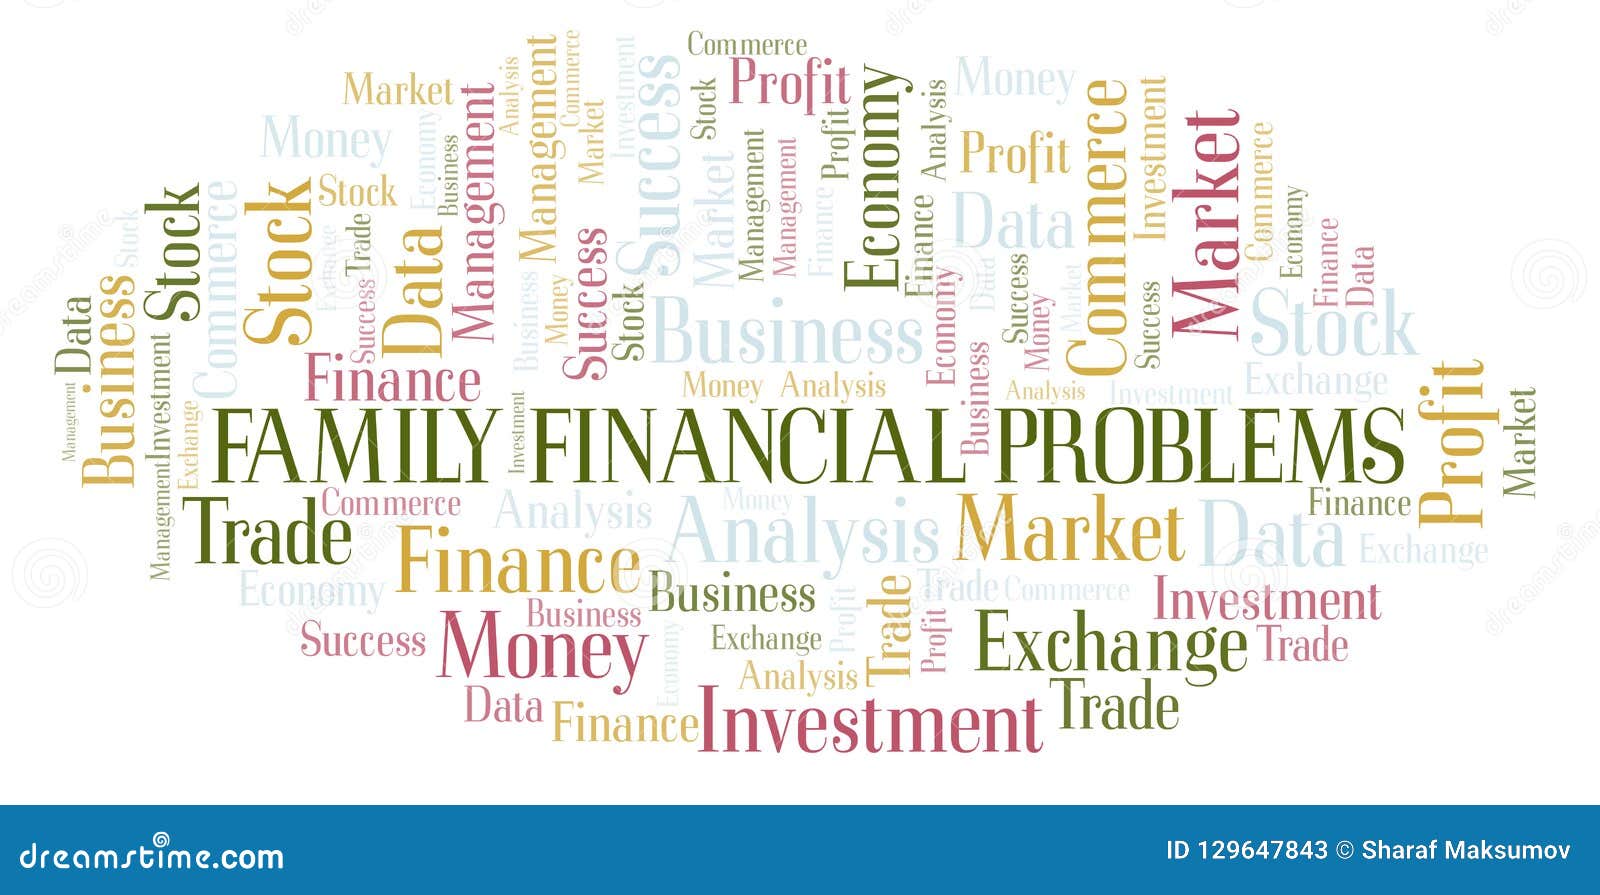 family financial problems essay